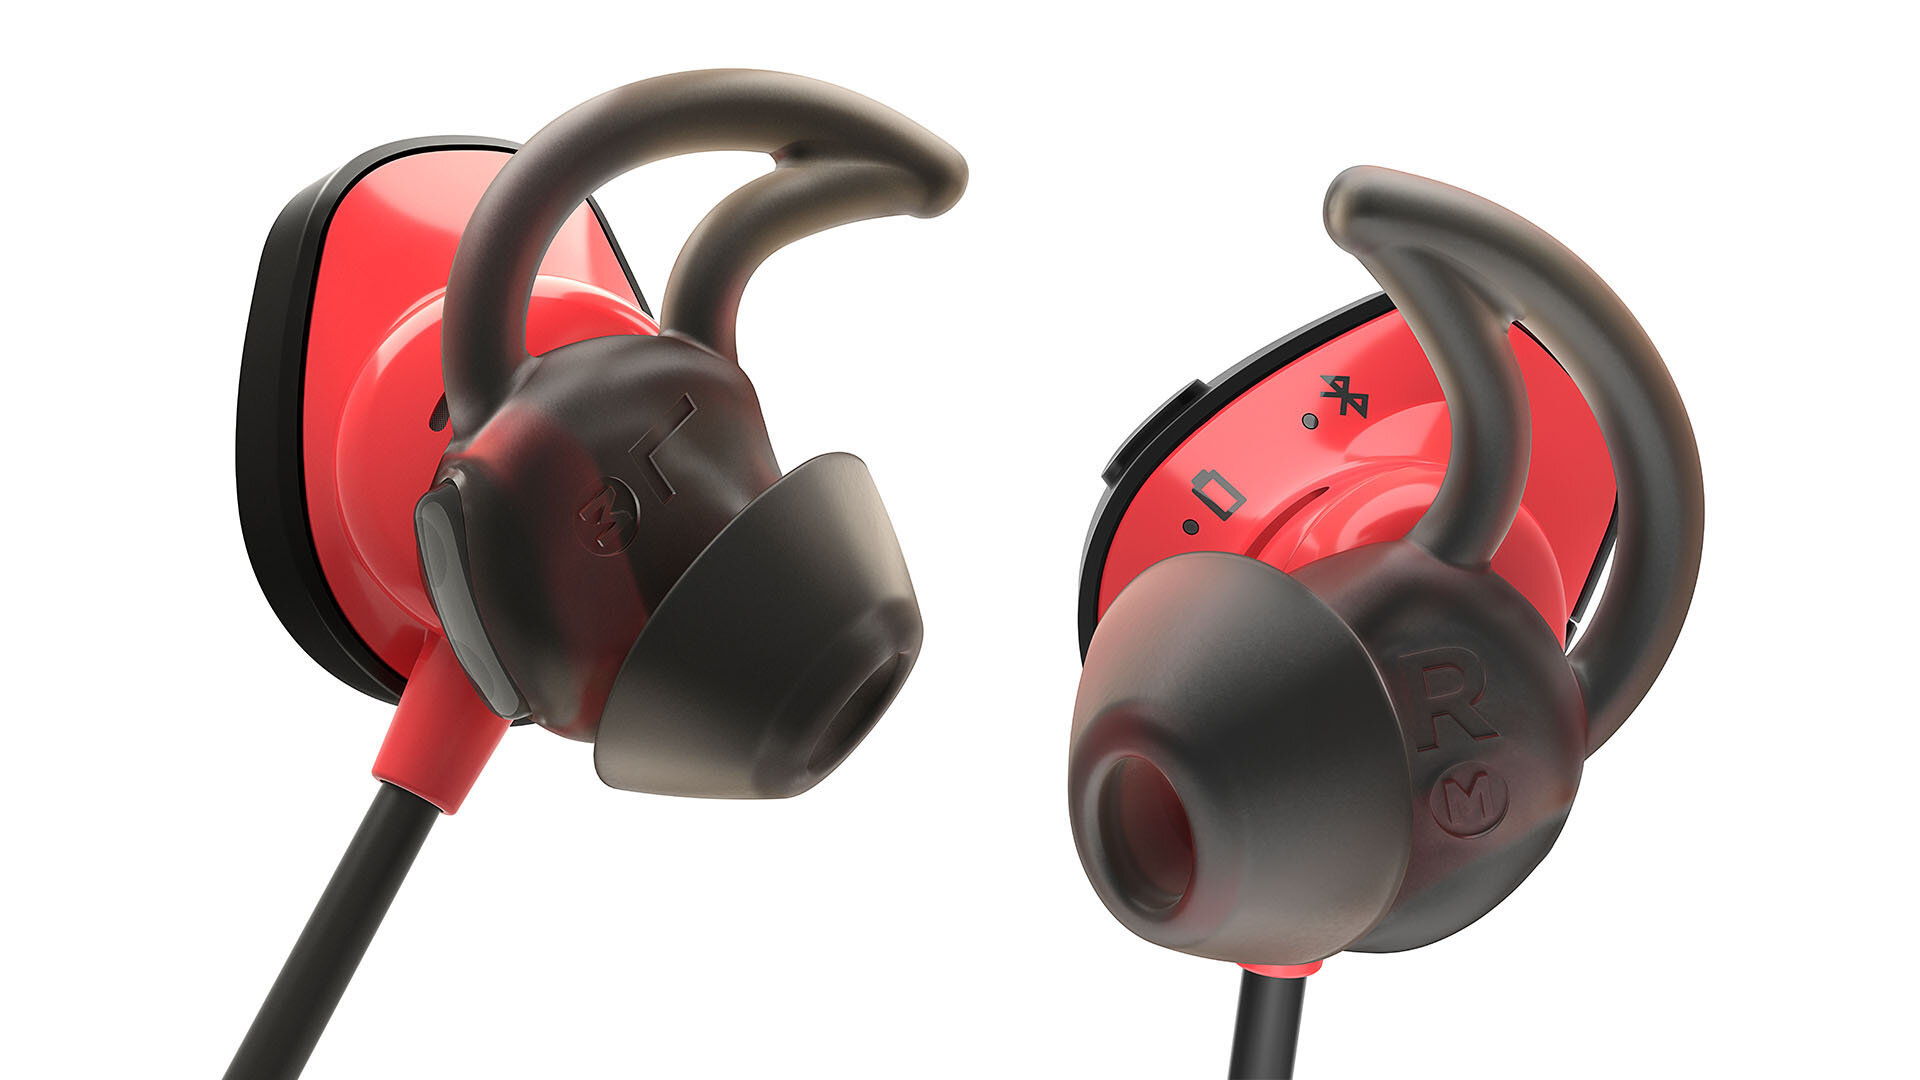 Bose-Flurry-left-and-right-earphones.jpg